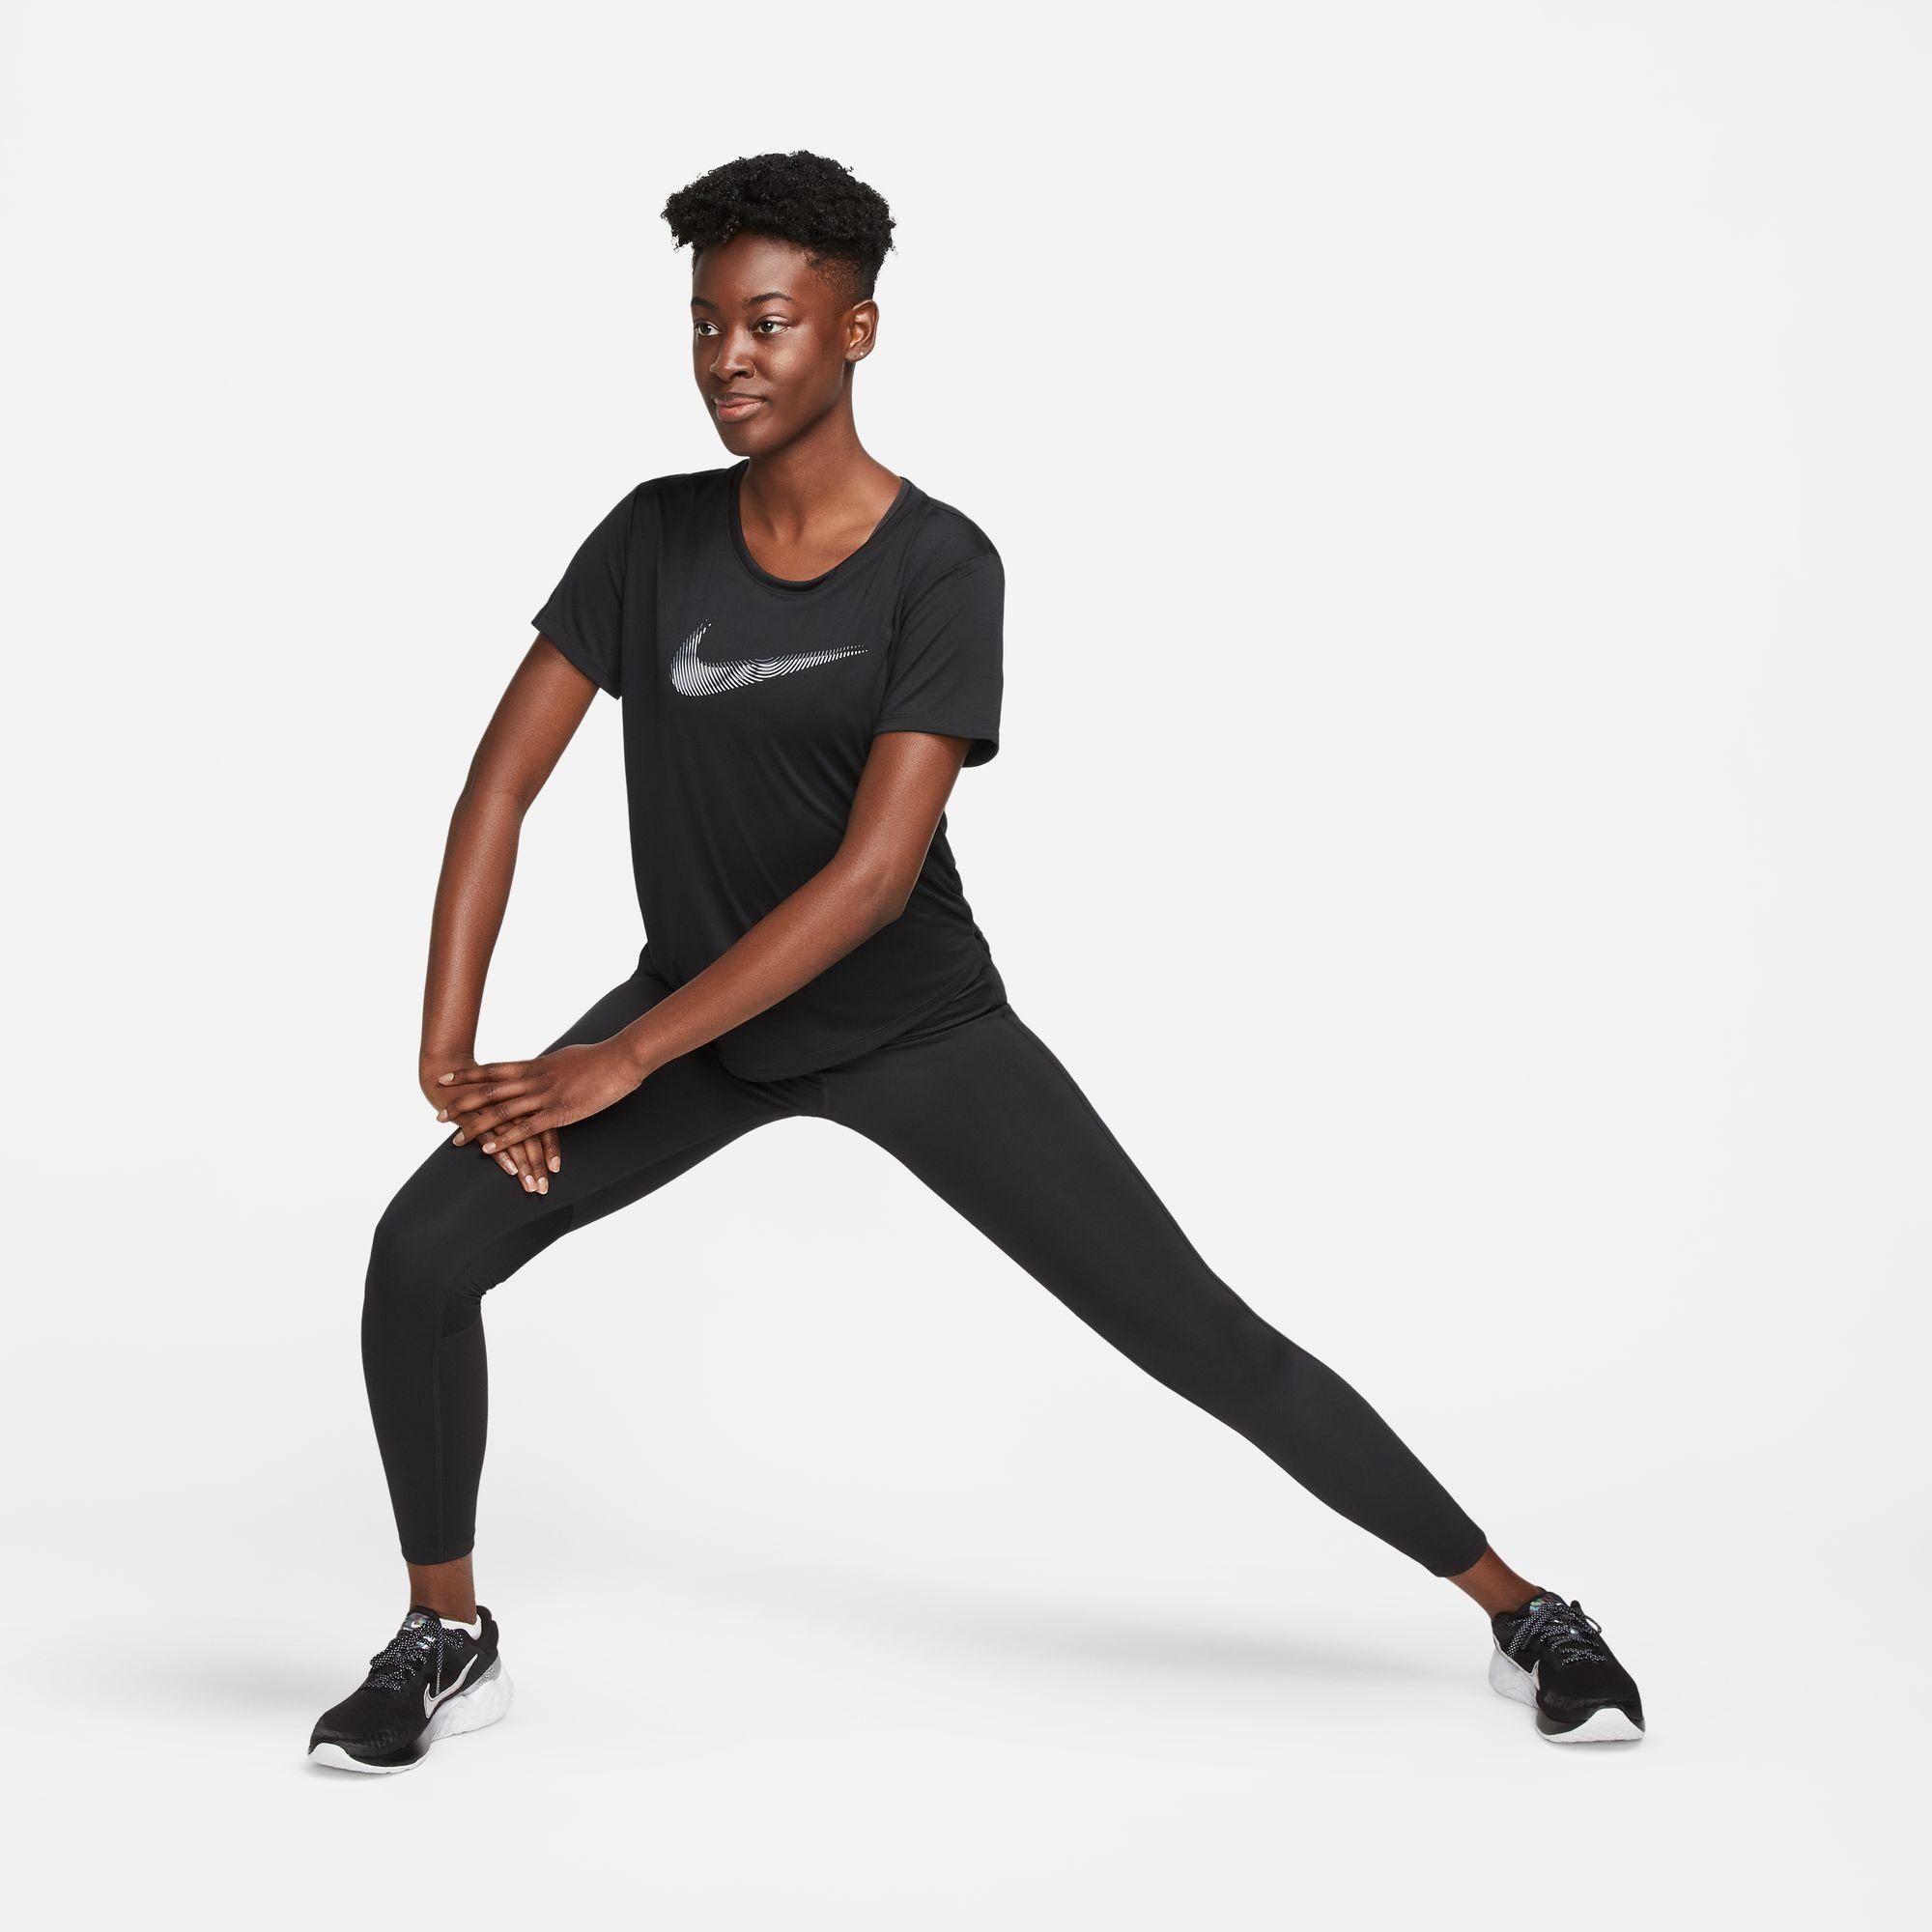 SHORT-SLEEVE RUNNING Nike TOP WOMEN'S DRI-FIT BLACK/COOL GREY SWOOSH Laufshirt